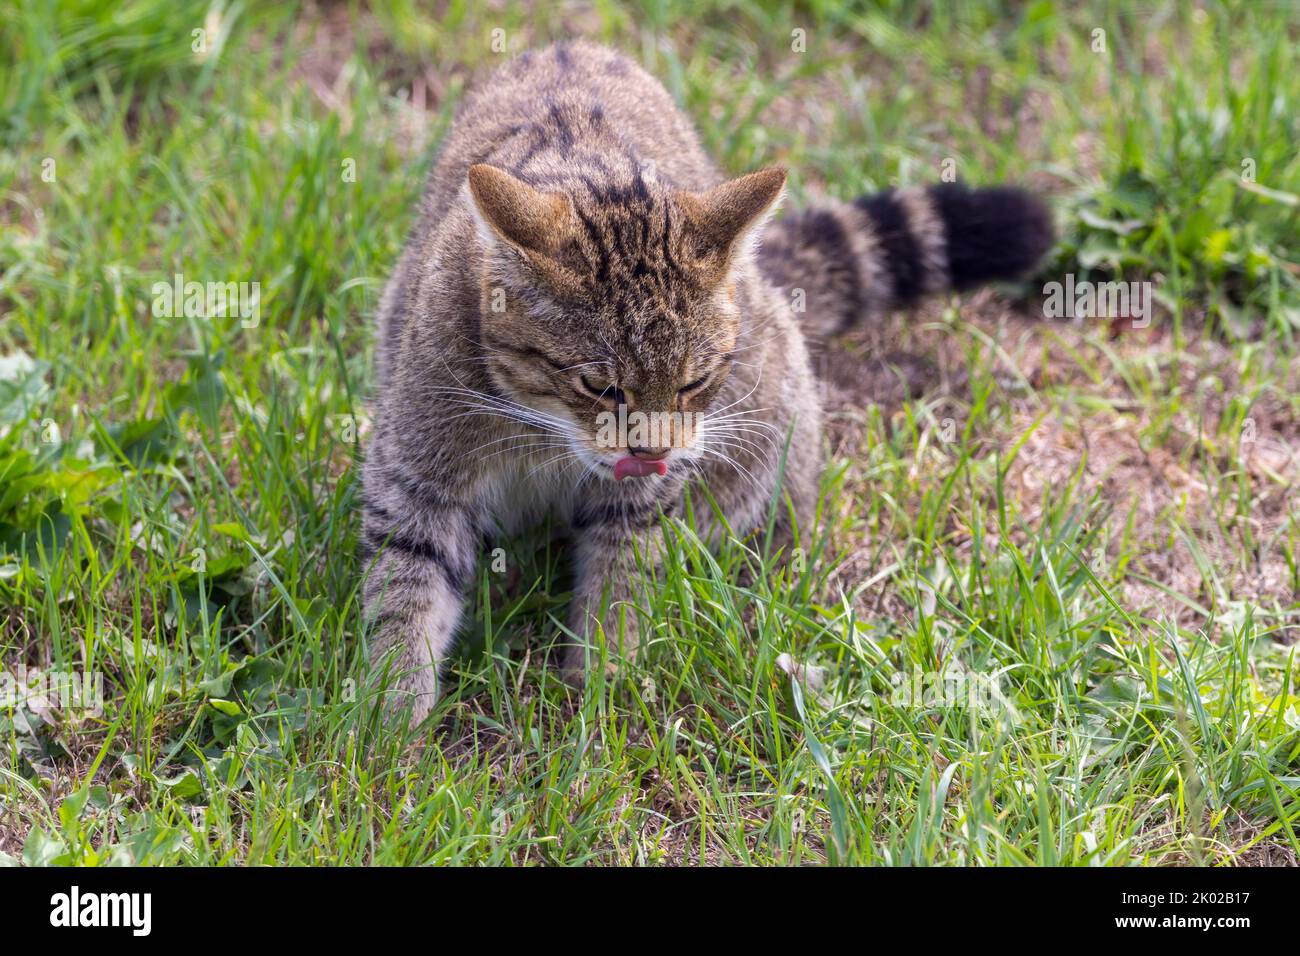 Scottish wild cat (Felis silvestris) captive breeding programme. Large wild tabby looking cat bushy blunt tail black rings and tip dark stripes on fur Stock Photo